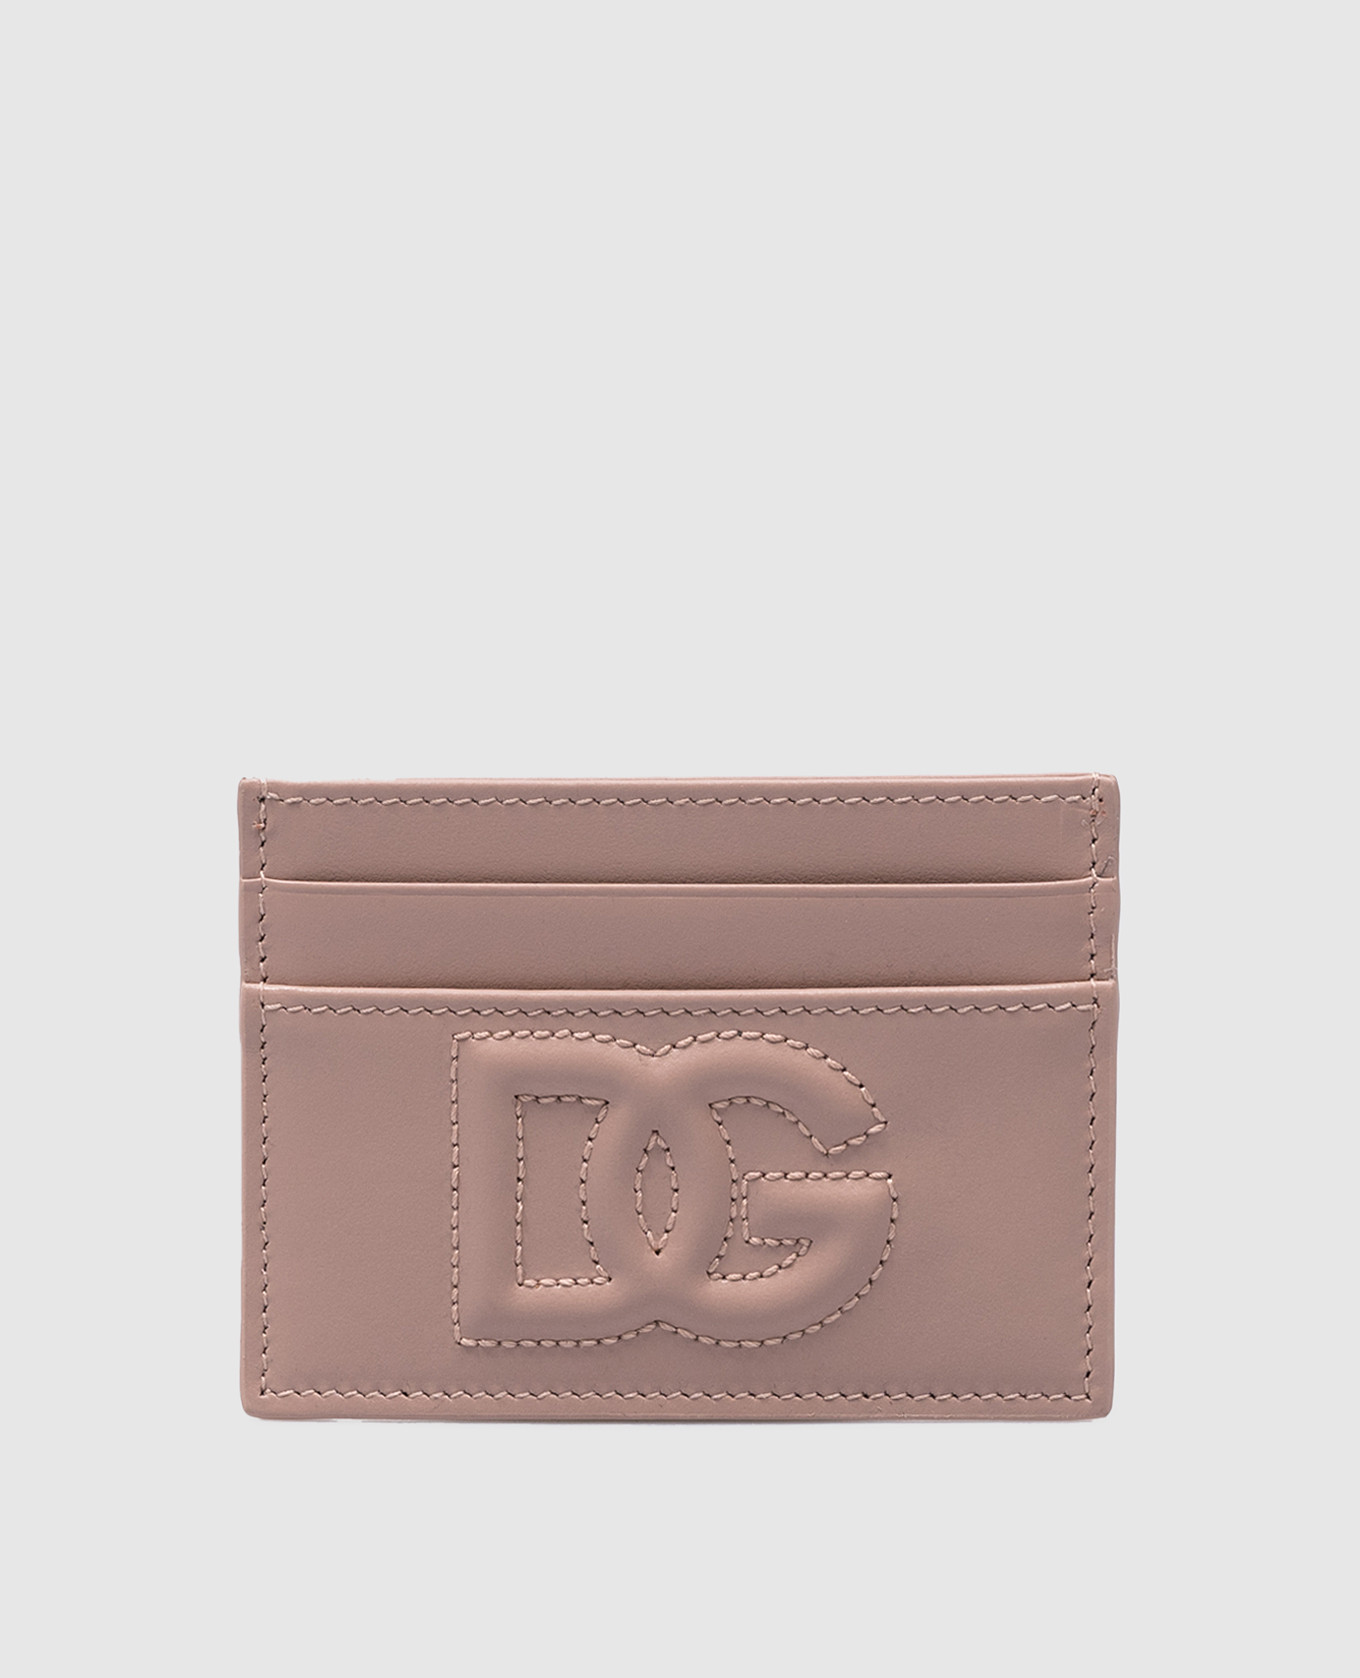 Beige leather card holder with DG logo